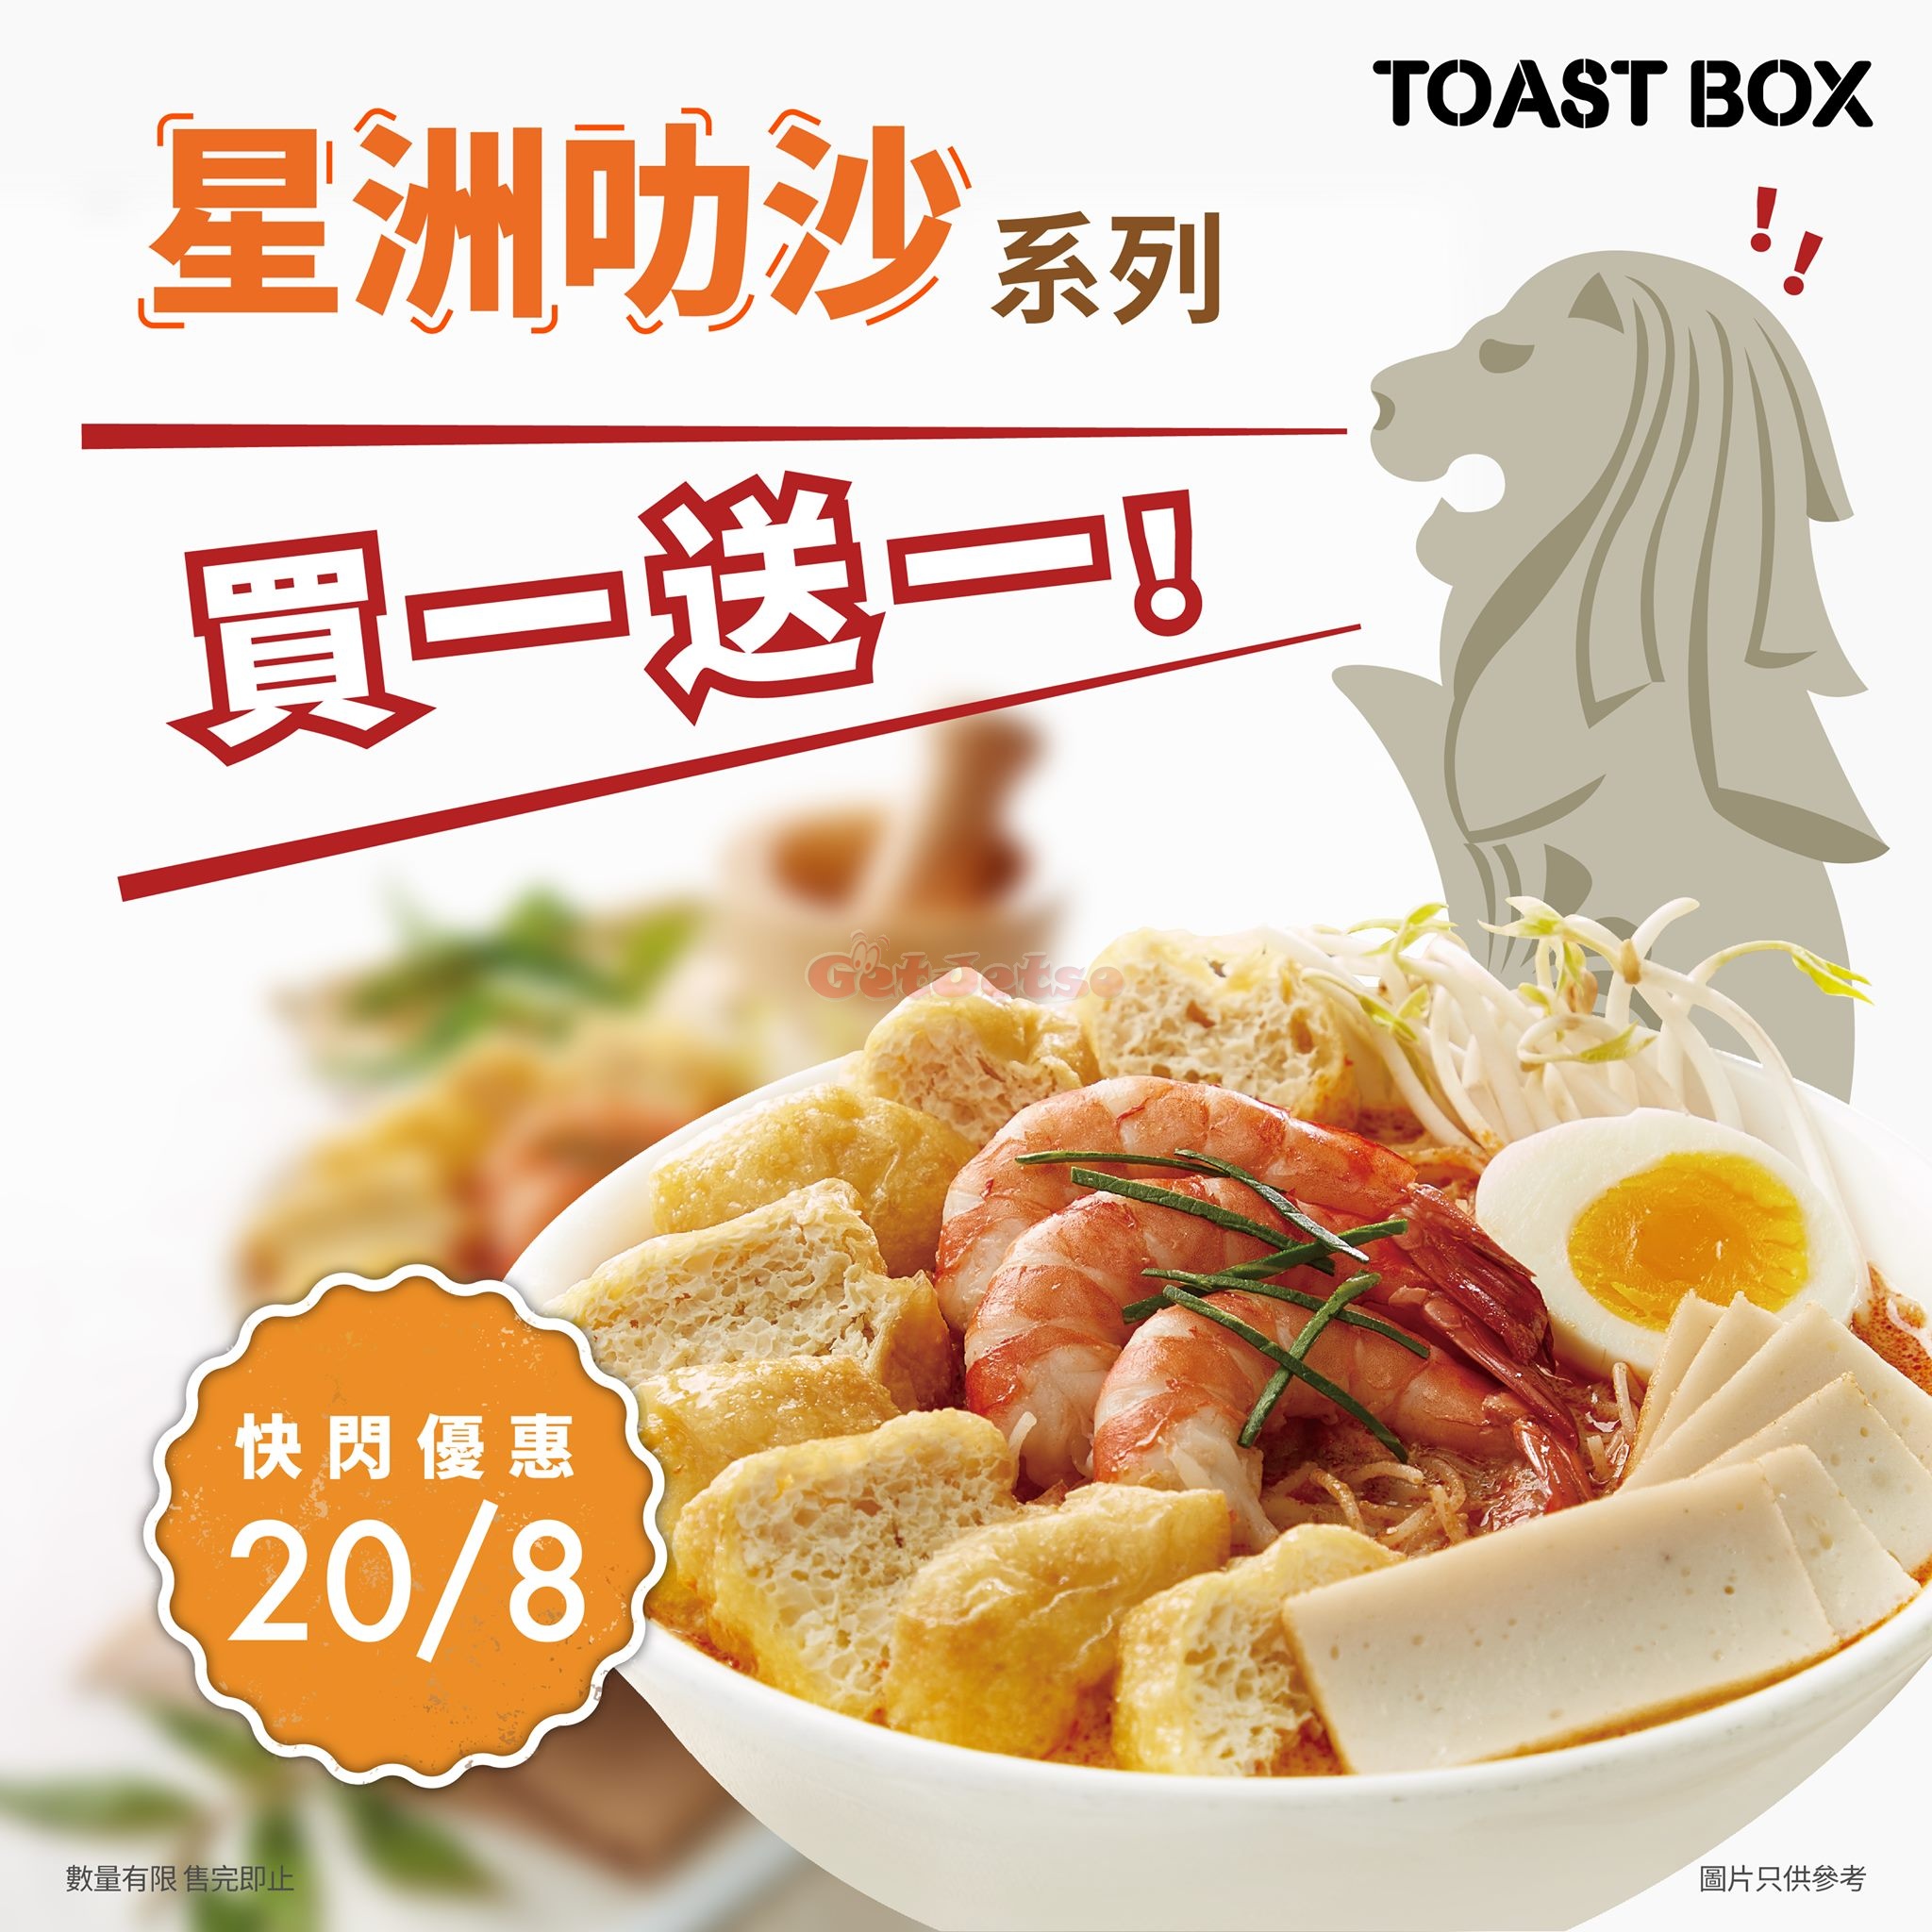 Toast Box 招牌叻沙系列買1送1優惠(21年8月20日)圖片1